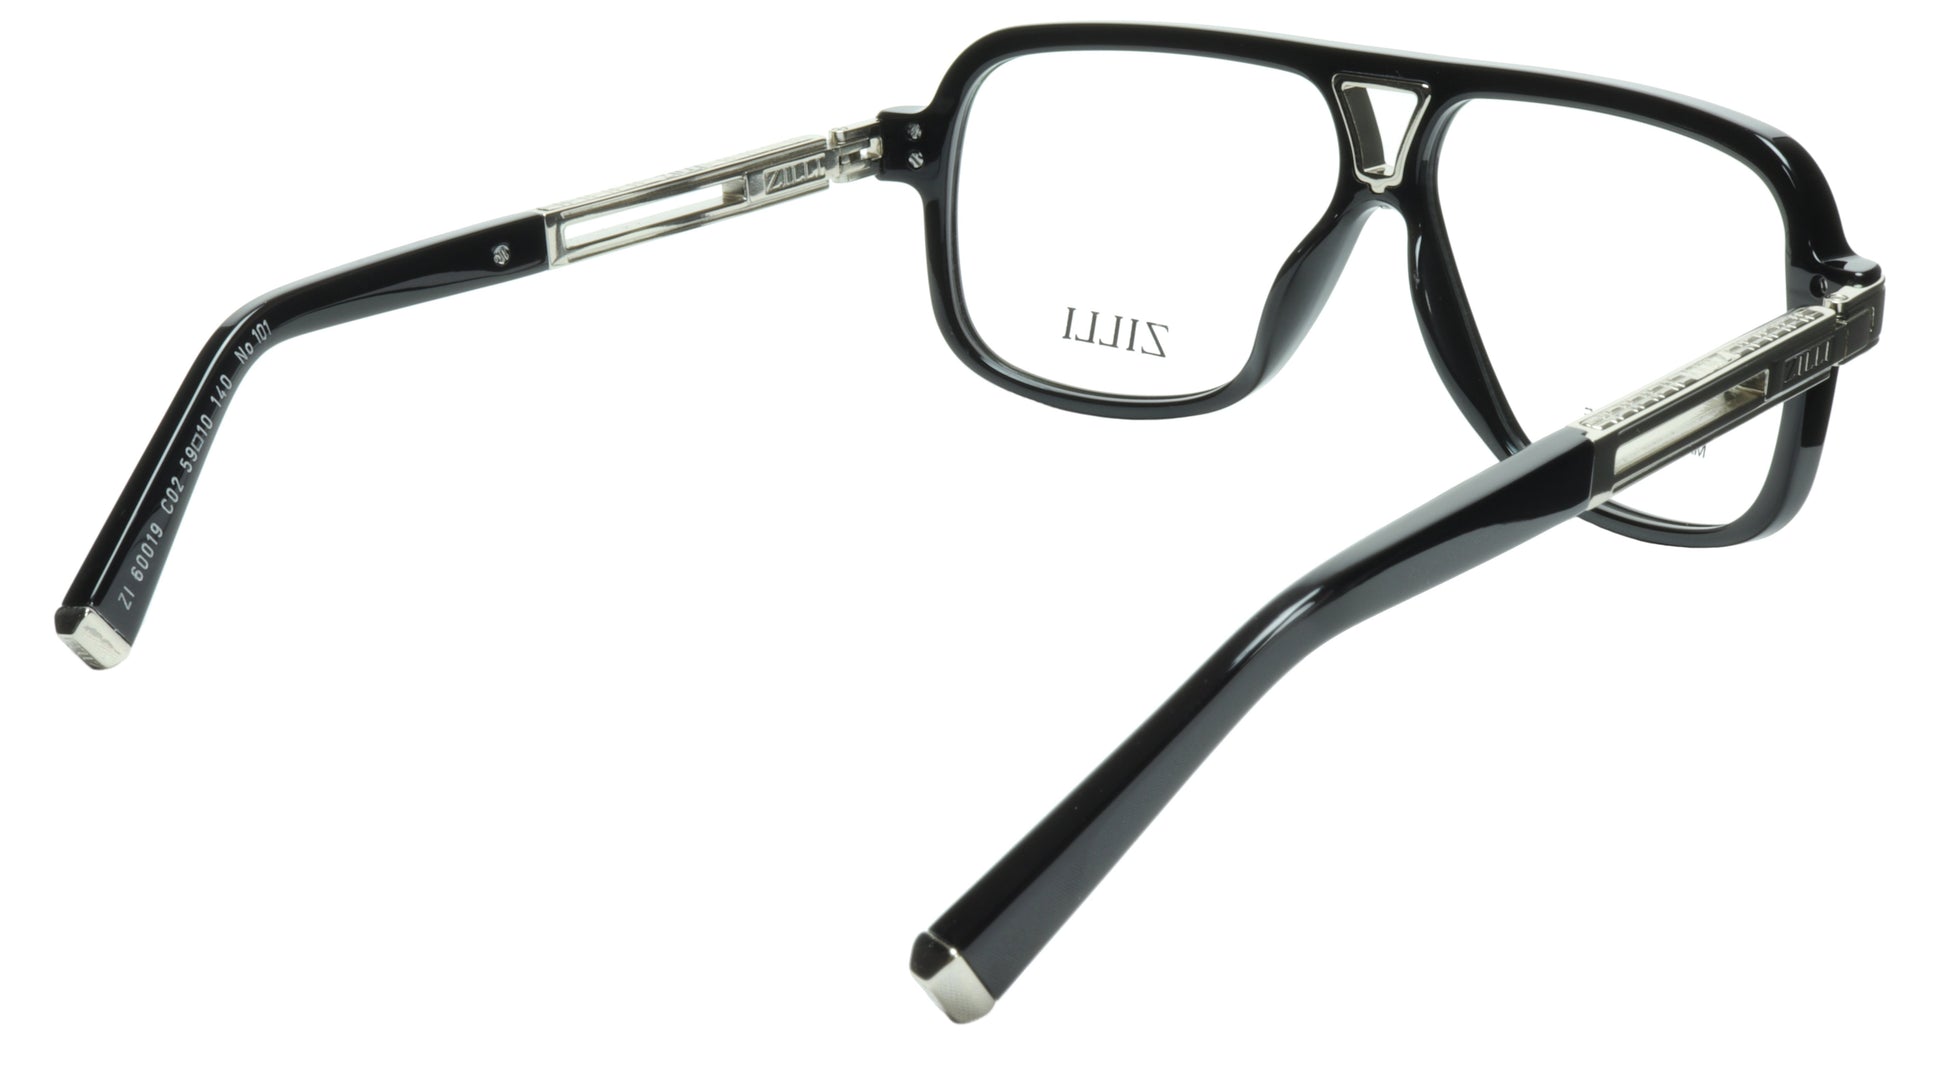 ZILLI Eyeglasses Frame Titanium Acetate Silver France Made ZI 60019 C02 - Frame Bay